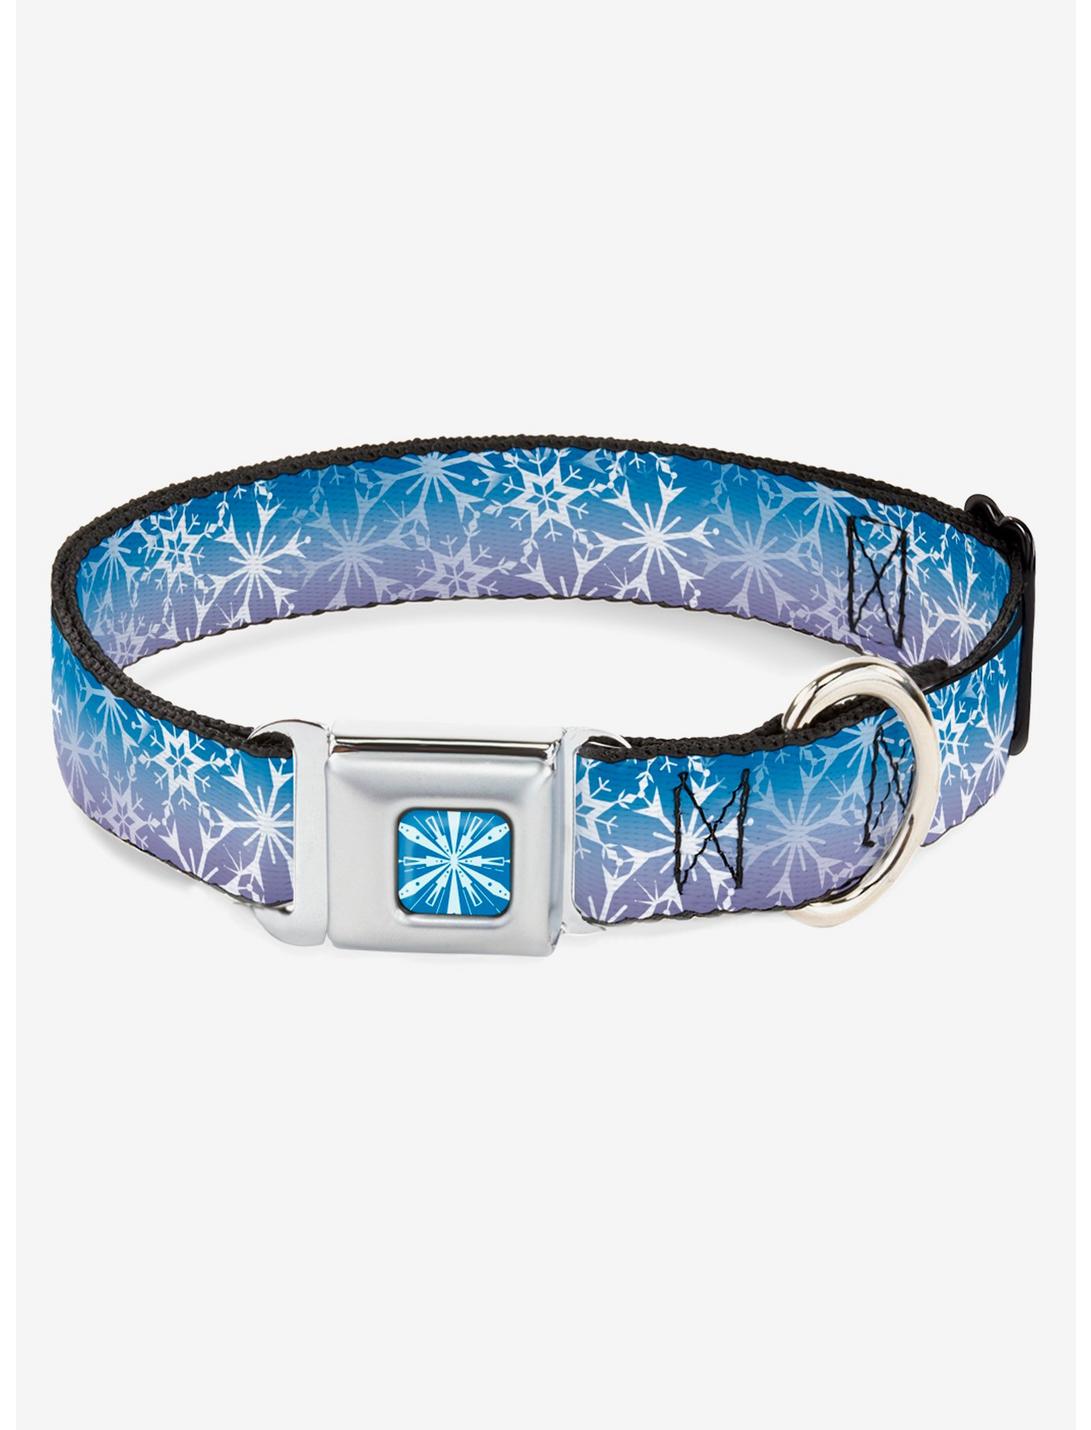 Disney Frozen 2 Snowflakes Dog Collar Seatbelt Buckle, BLUE, hi-res